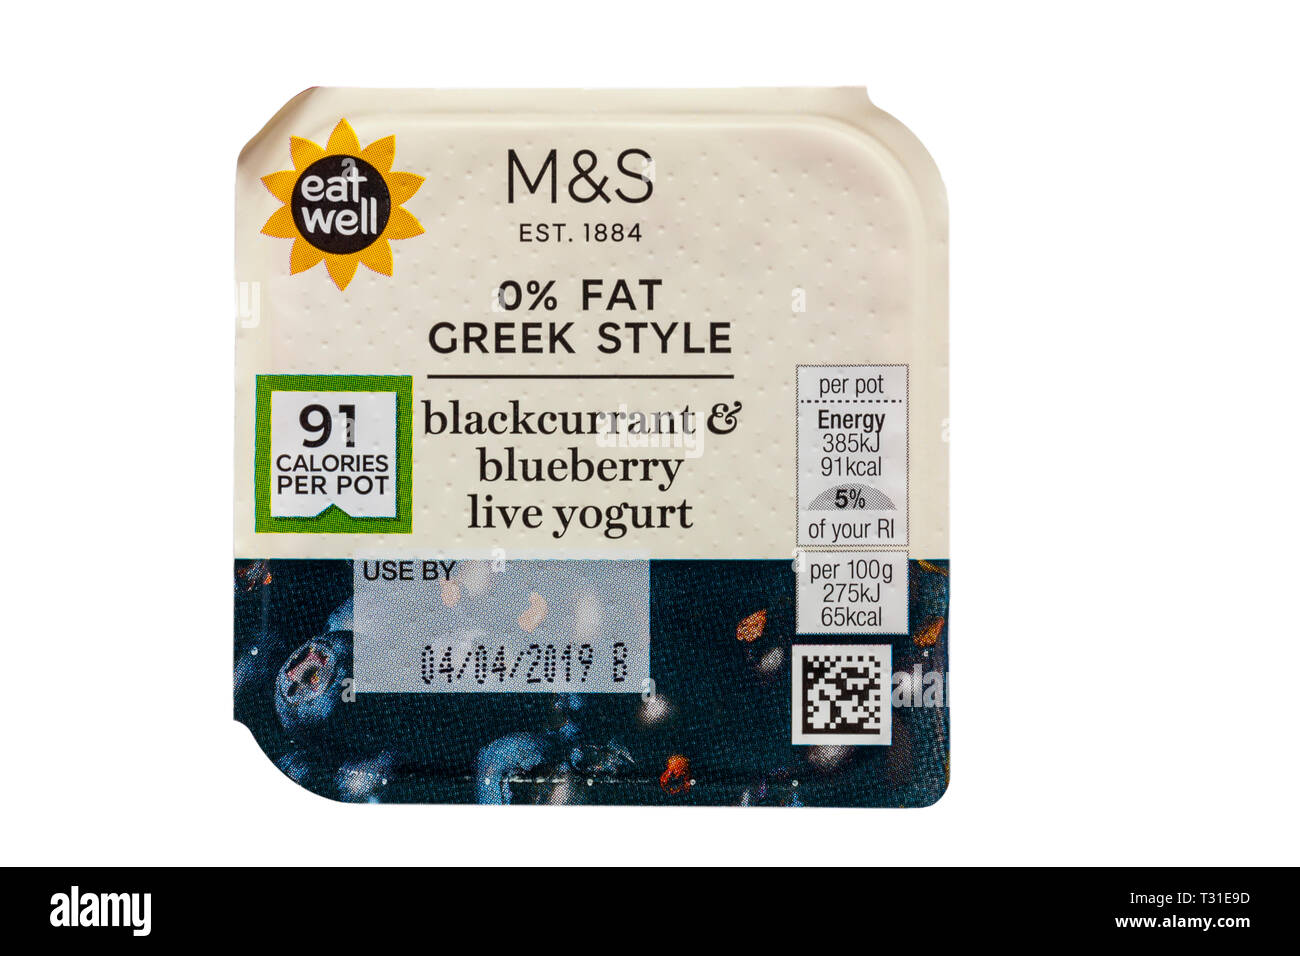 M&S 0% fat Greek style blackcurrant & blueberry live yogurt isolated on white background Stock Photo